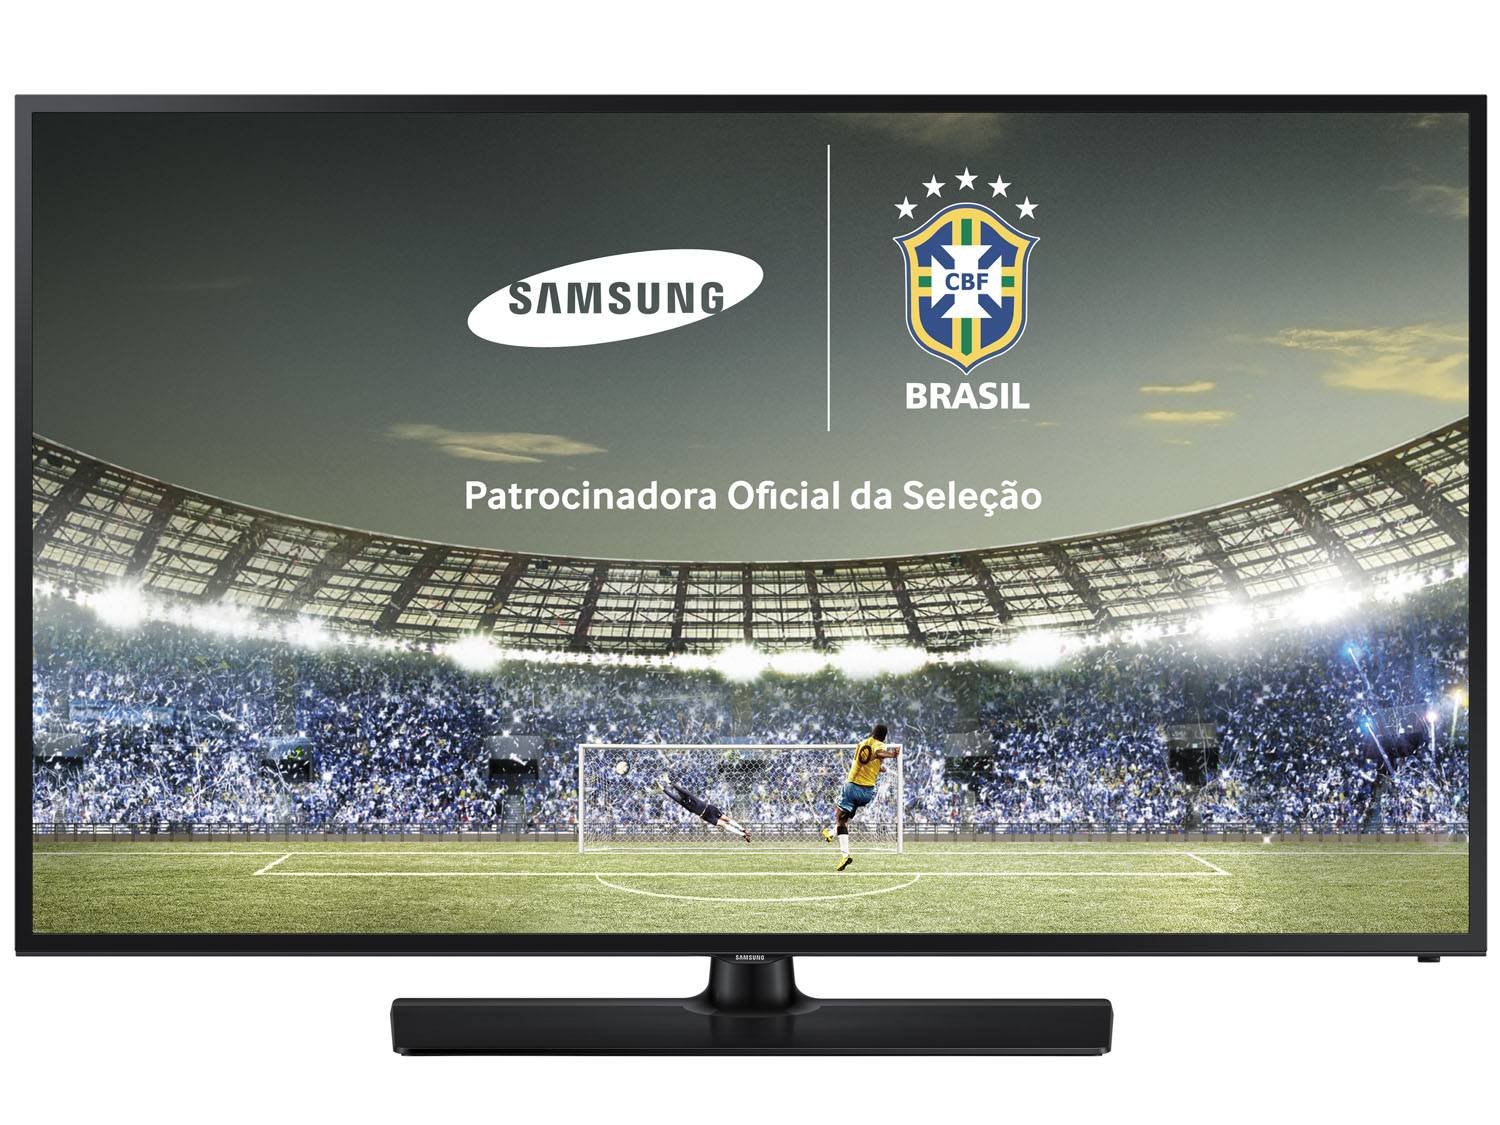 Samsung Led Tv Series 4 4000 Инструкция